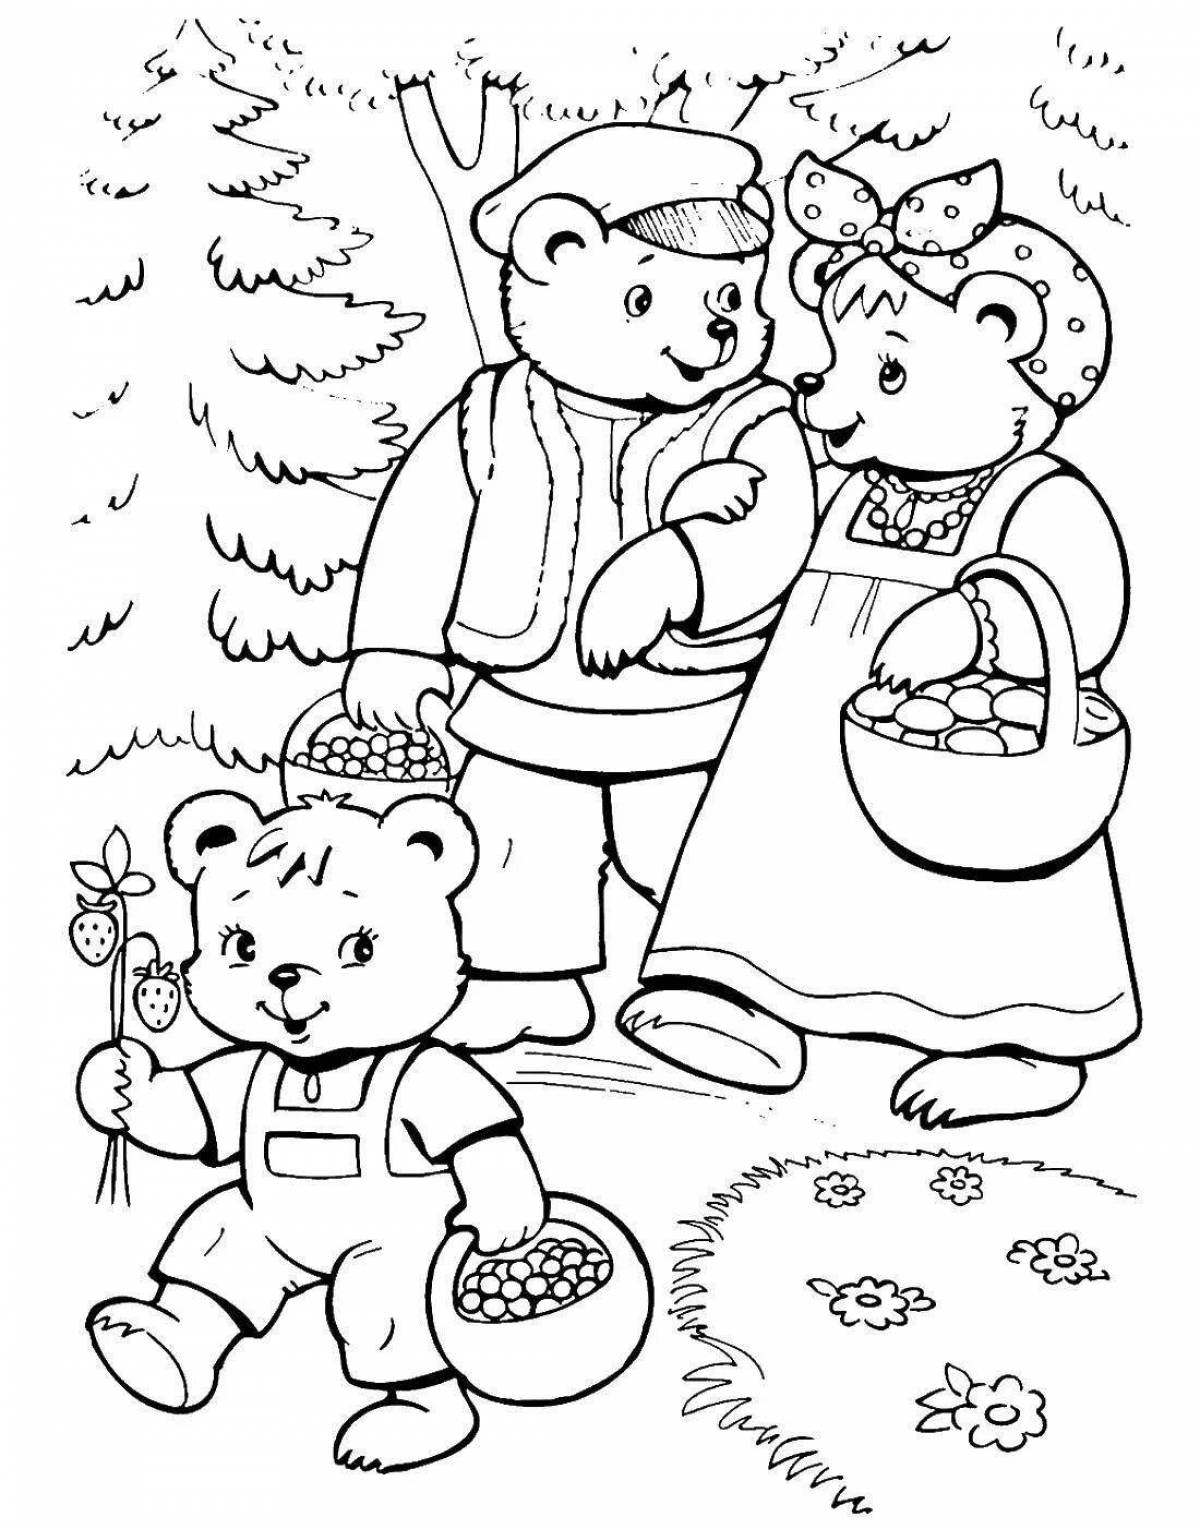 Cute 3 bears coloring book for kids